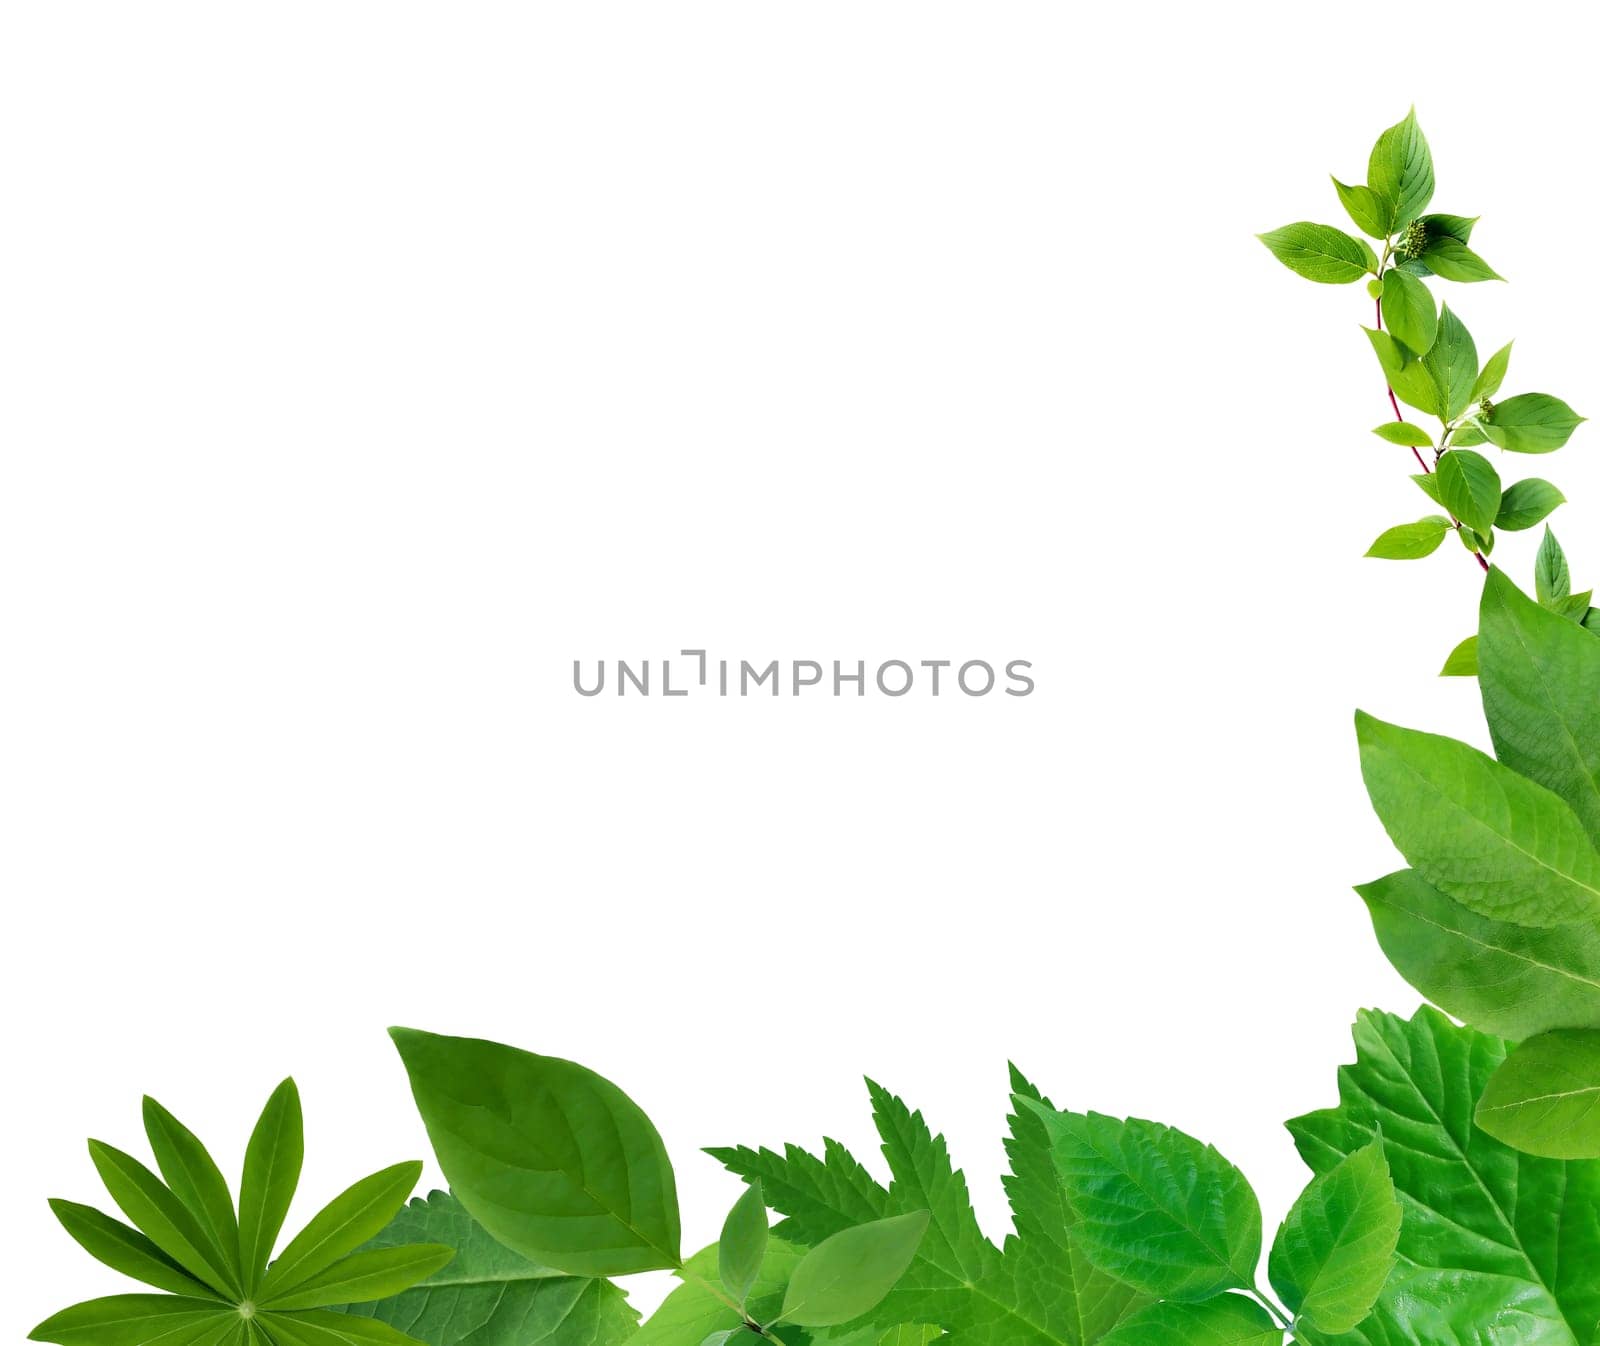 Green Leaves Background by kvkirillov